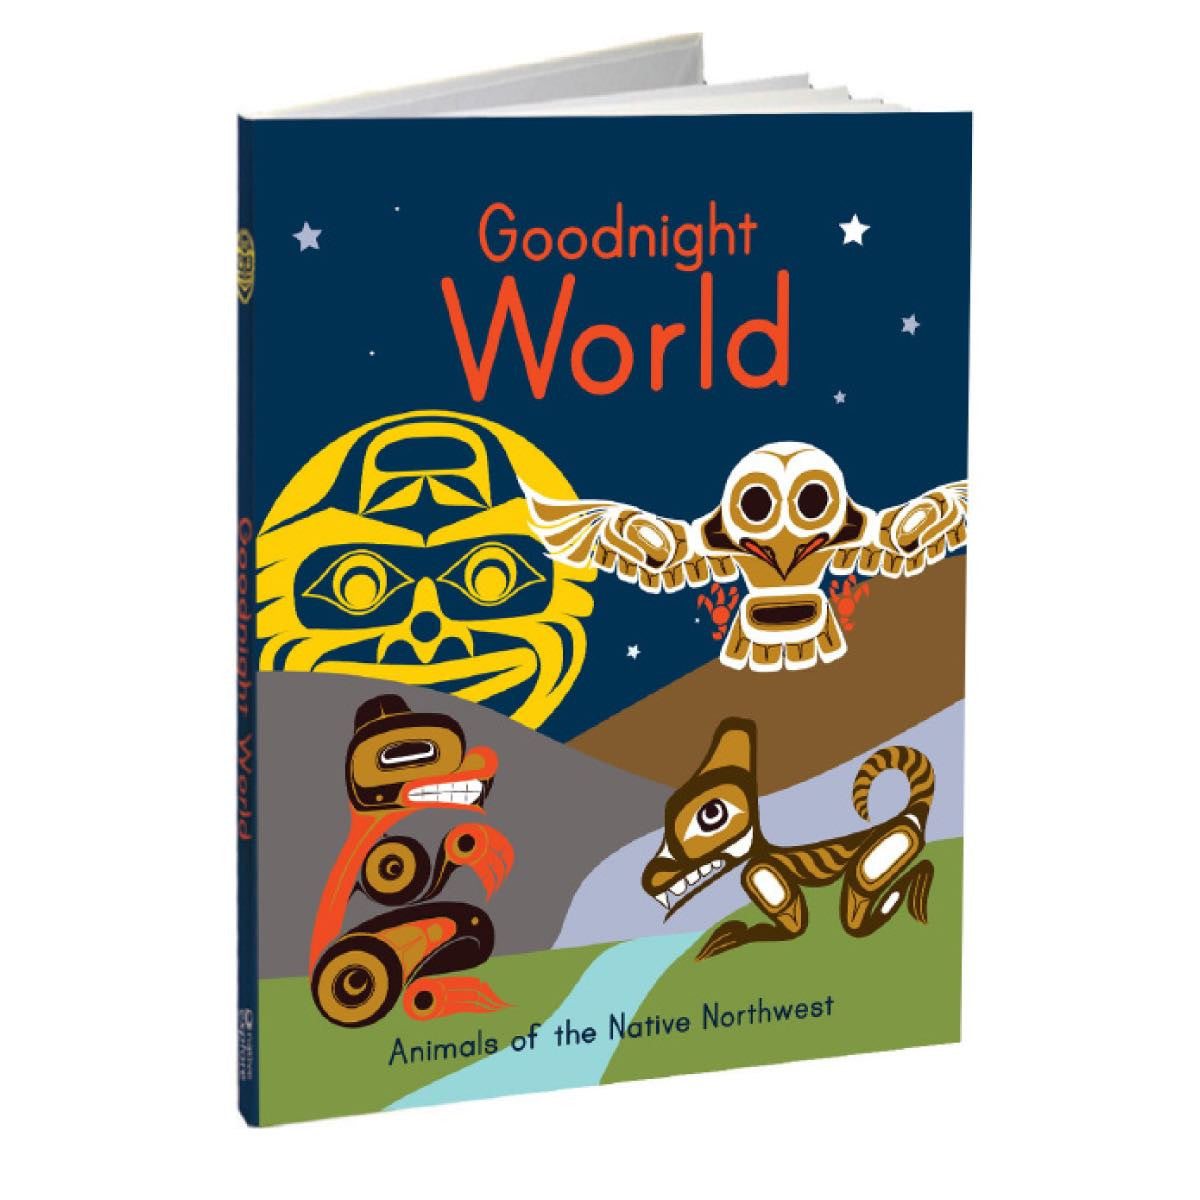 Goodnight World Board Book